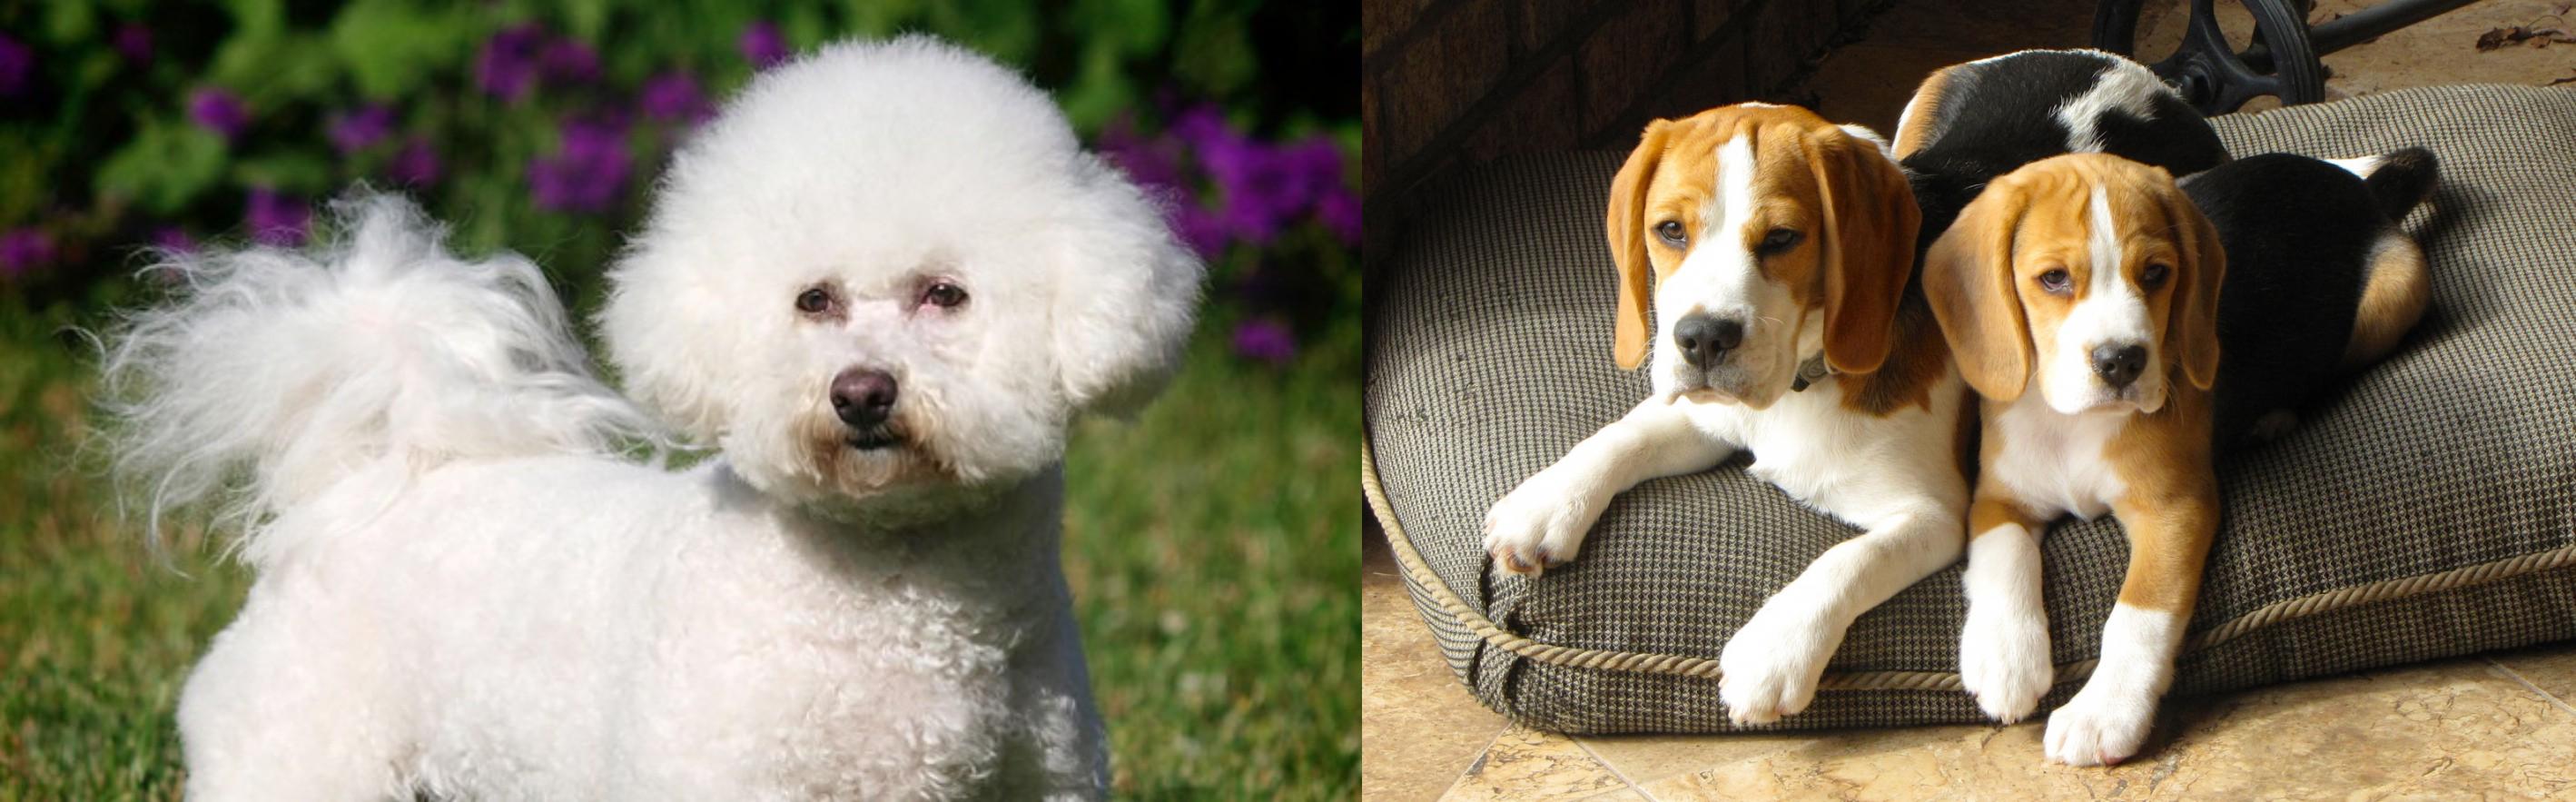 Bichon Frise vs Beagle Breed Comparison MyDogBreeds